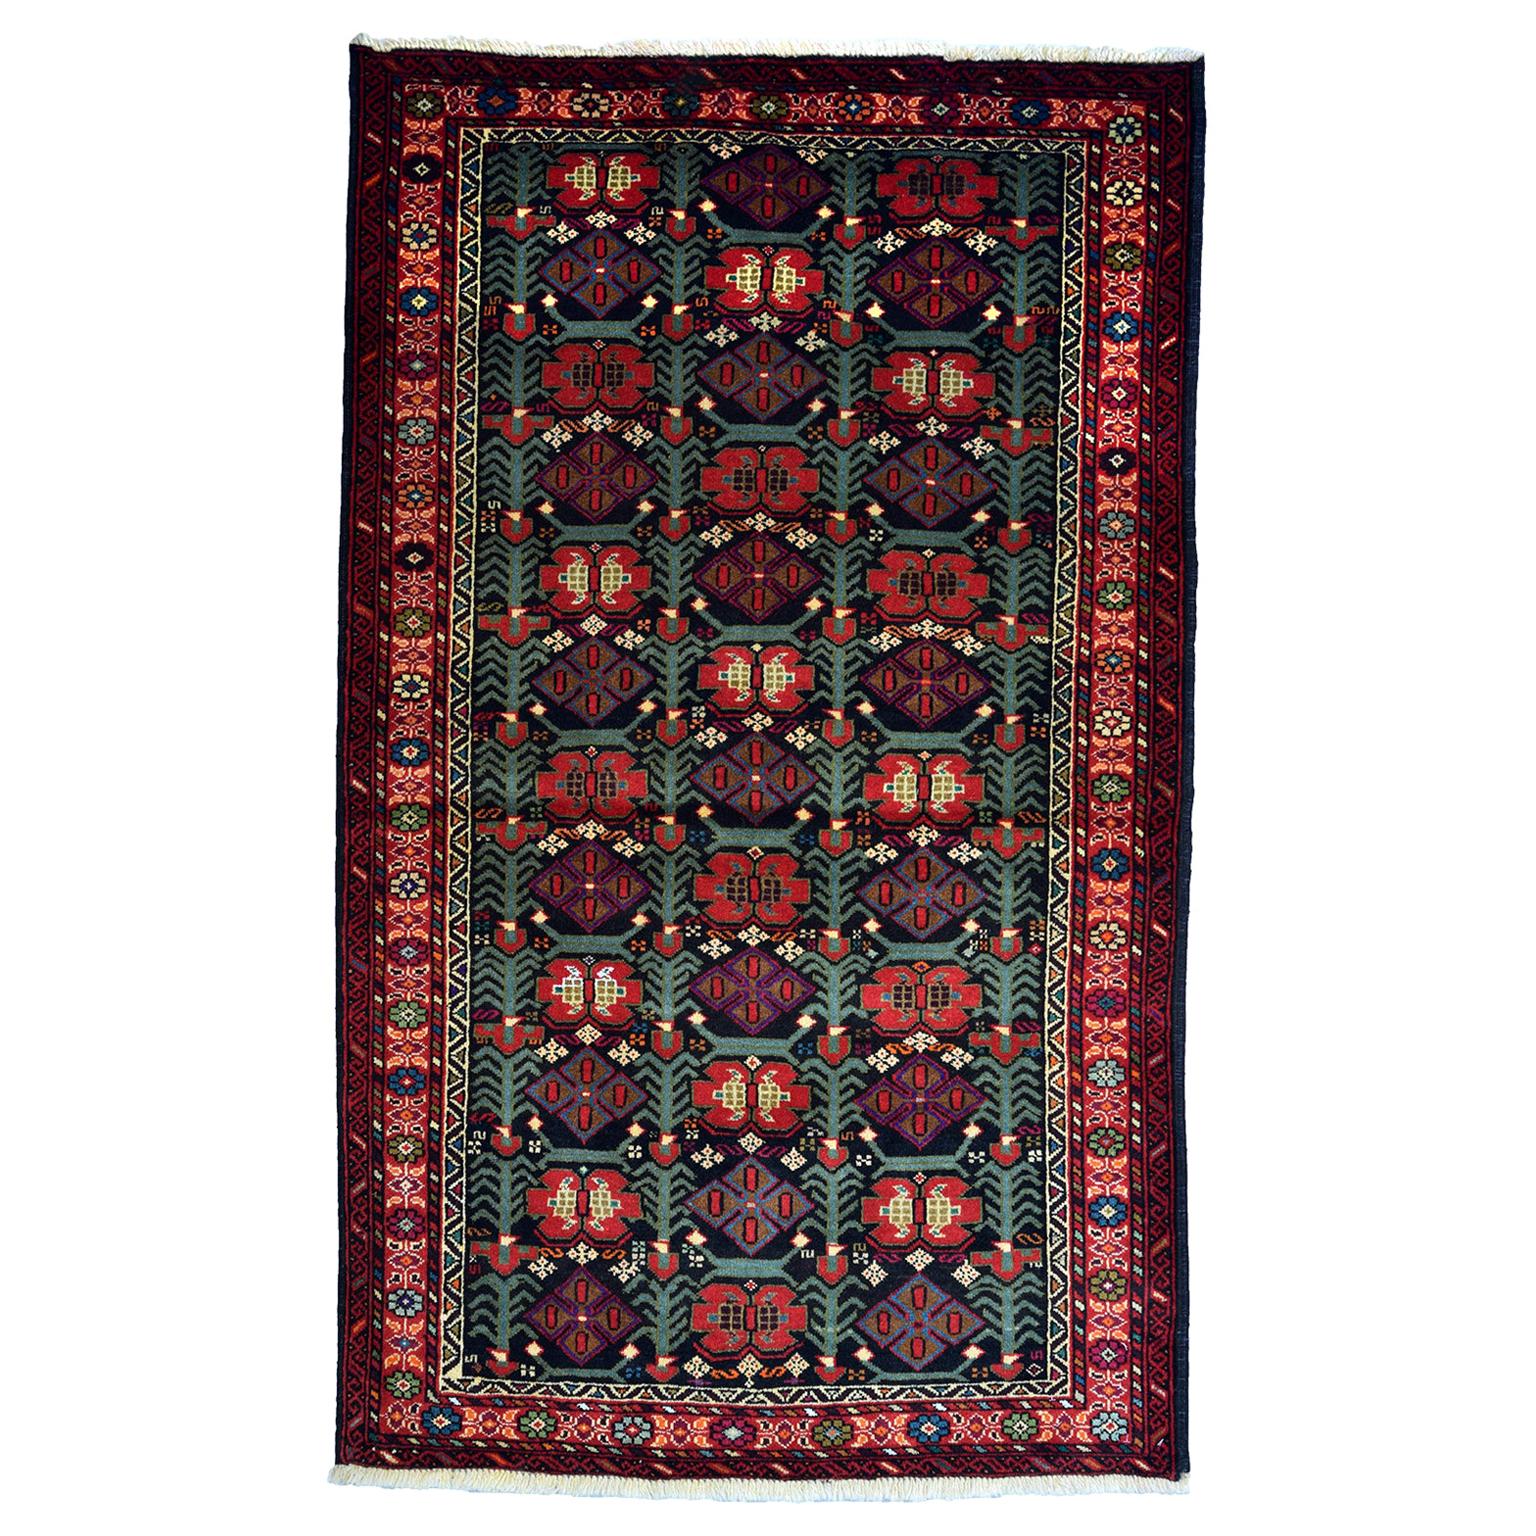 Vintage 1950s Wool Persian Balouchi Rug, 3' x 5'